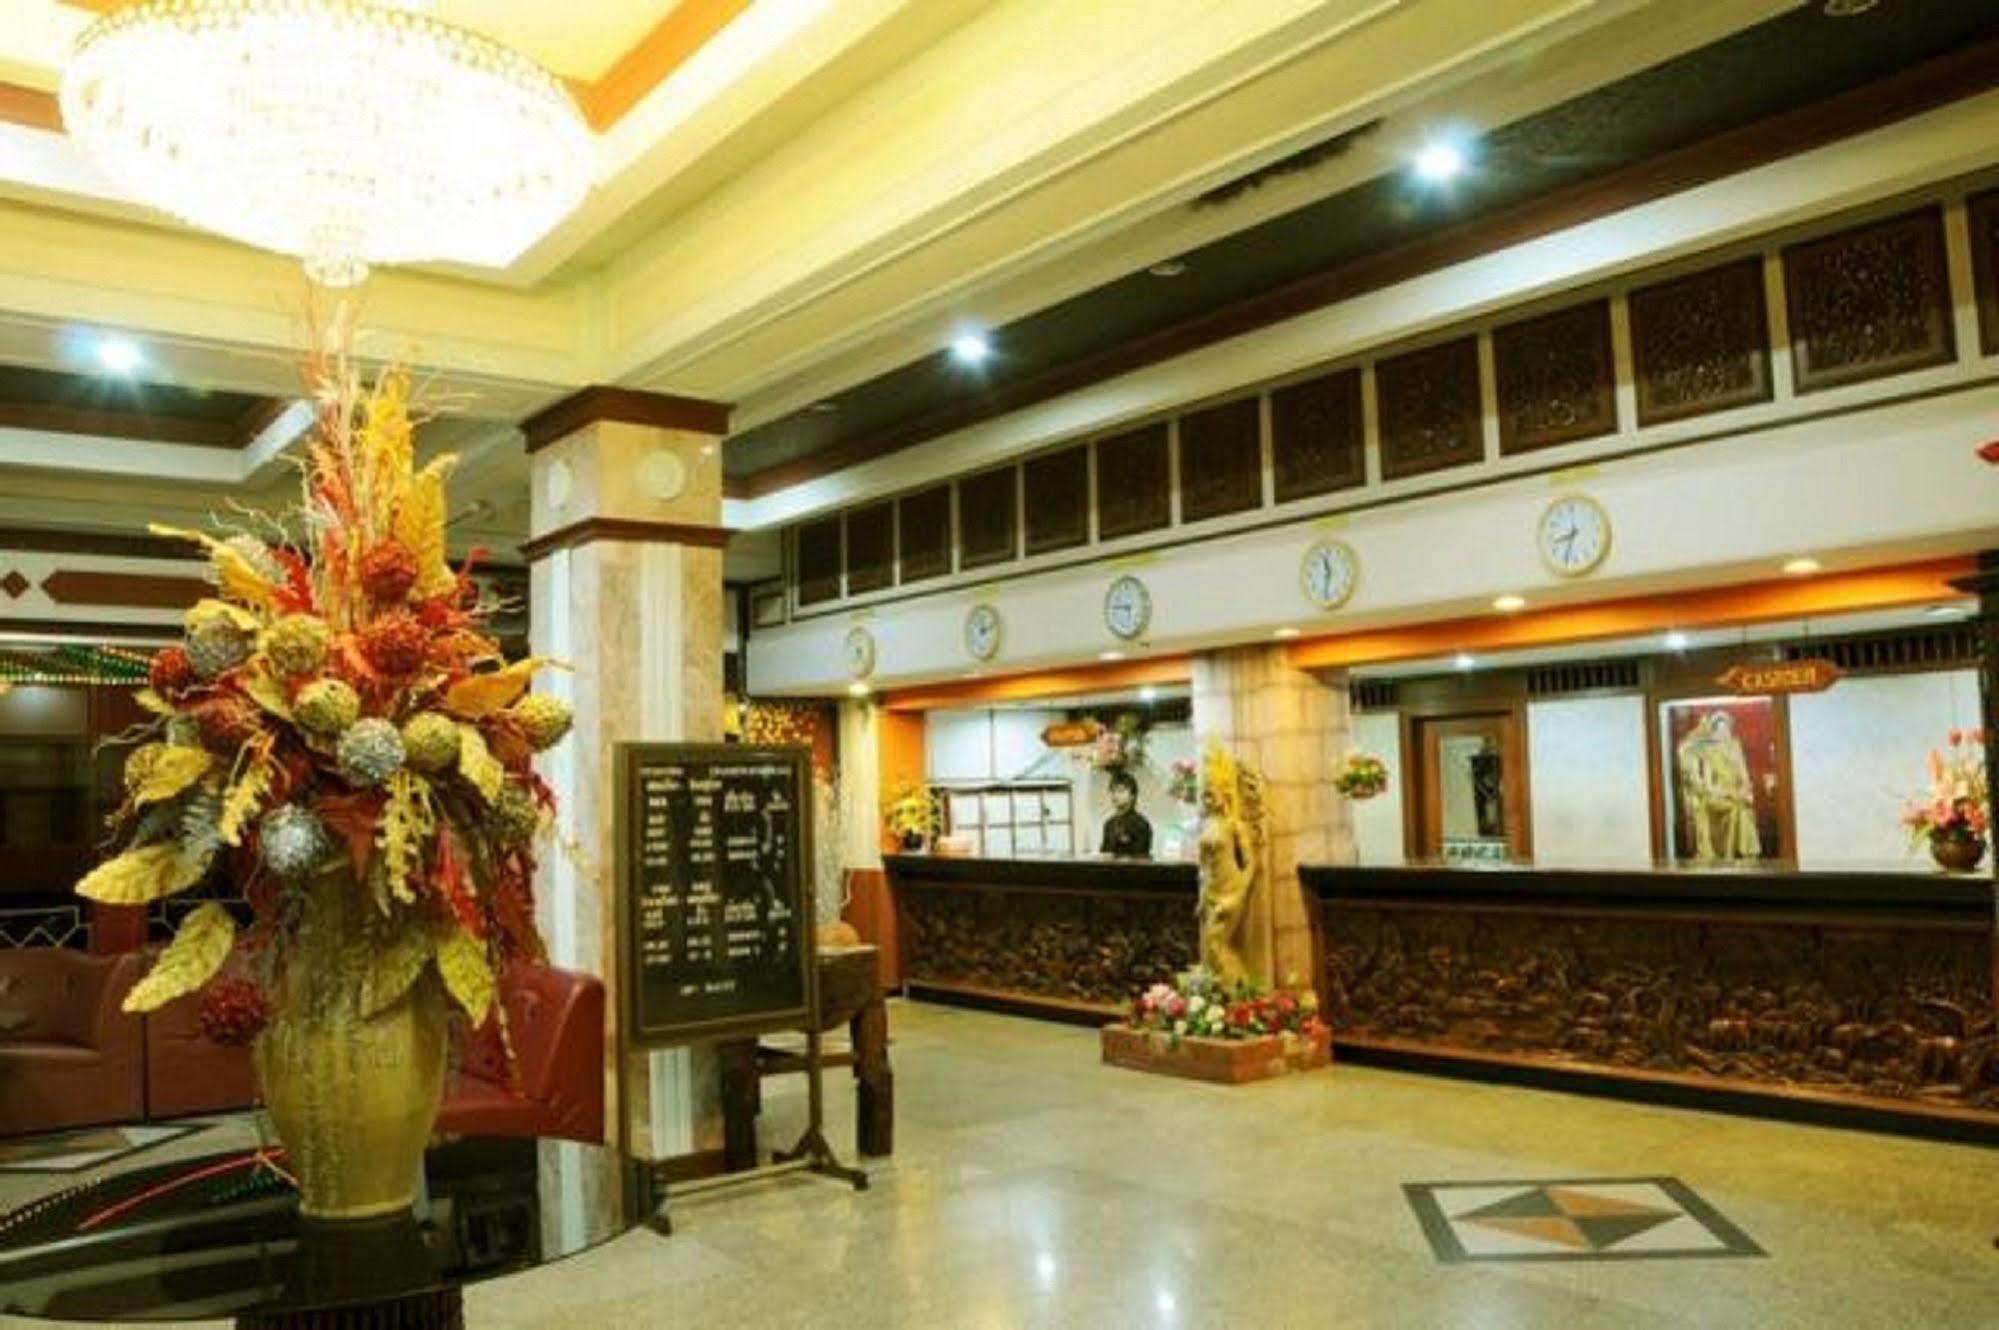 Amarin Nakorn Hotel Phitsanulok Exterior foto